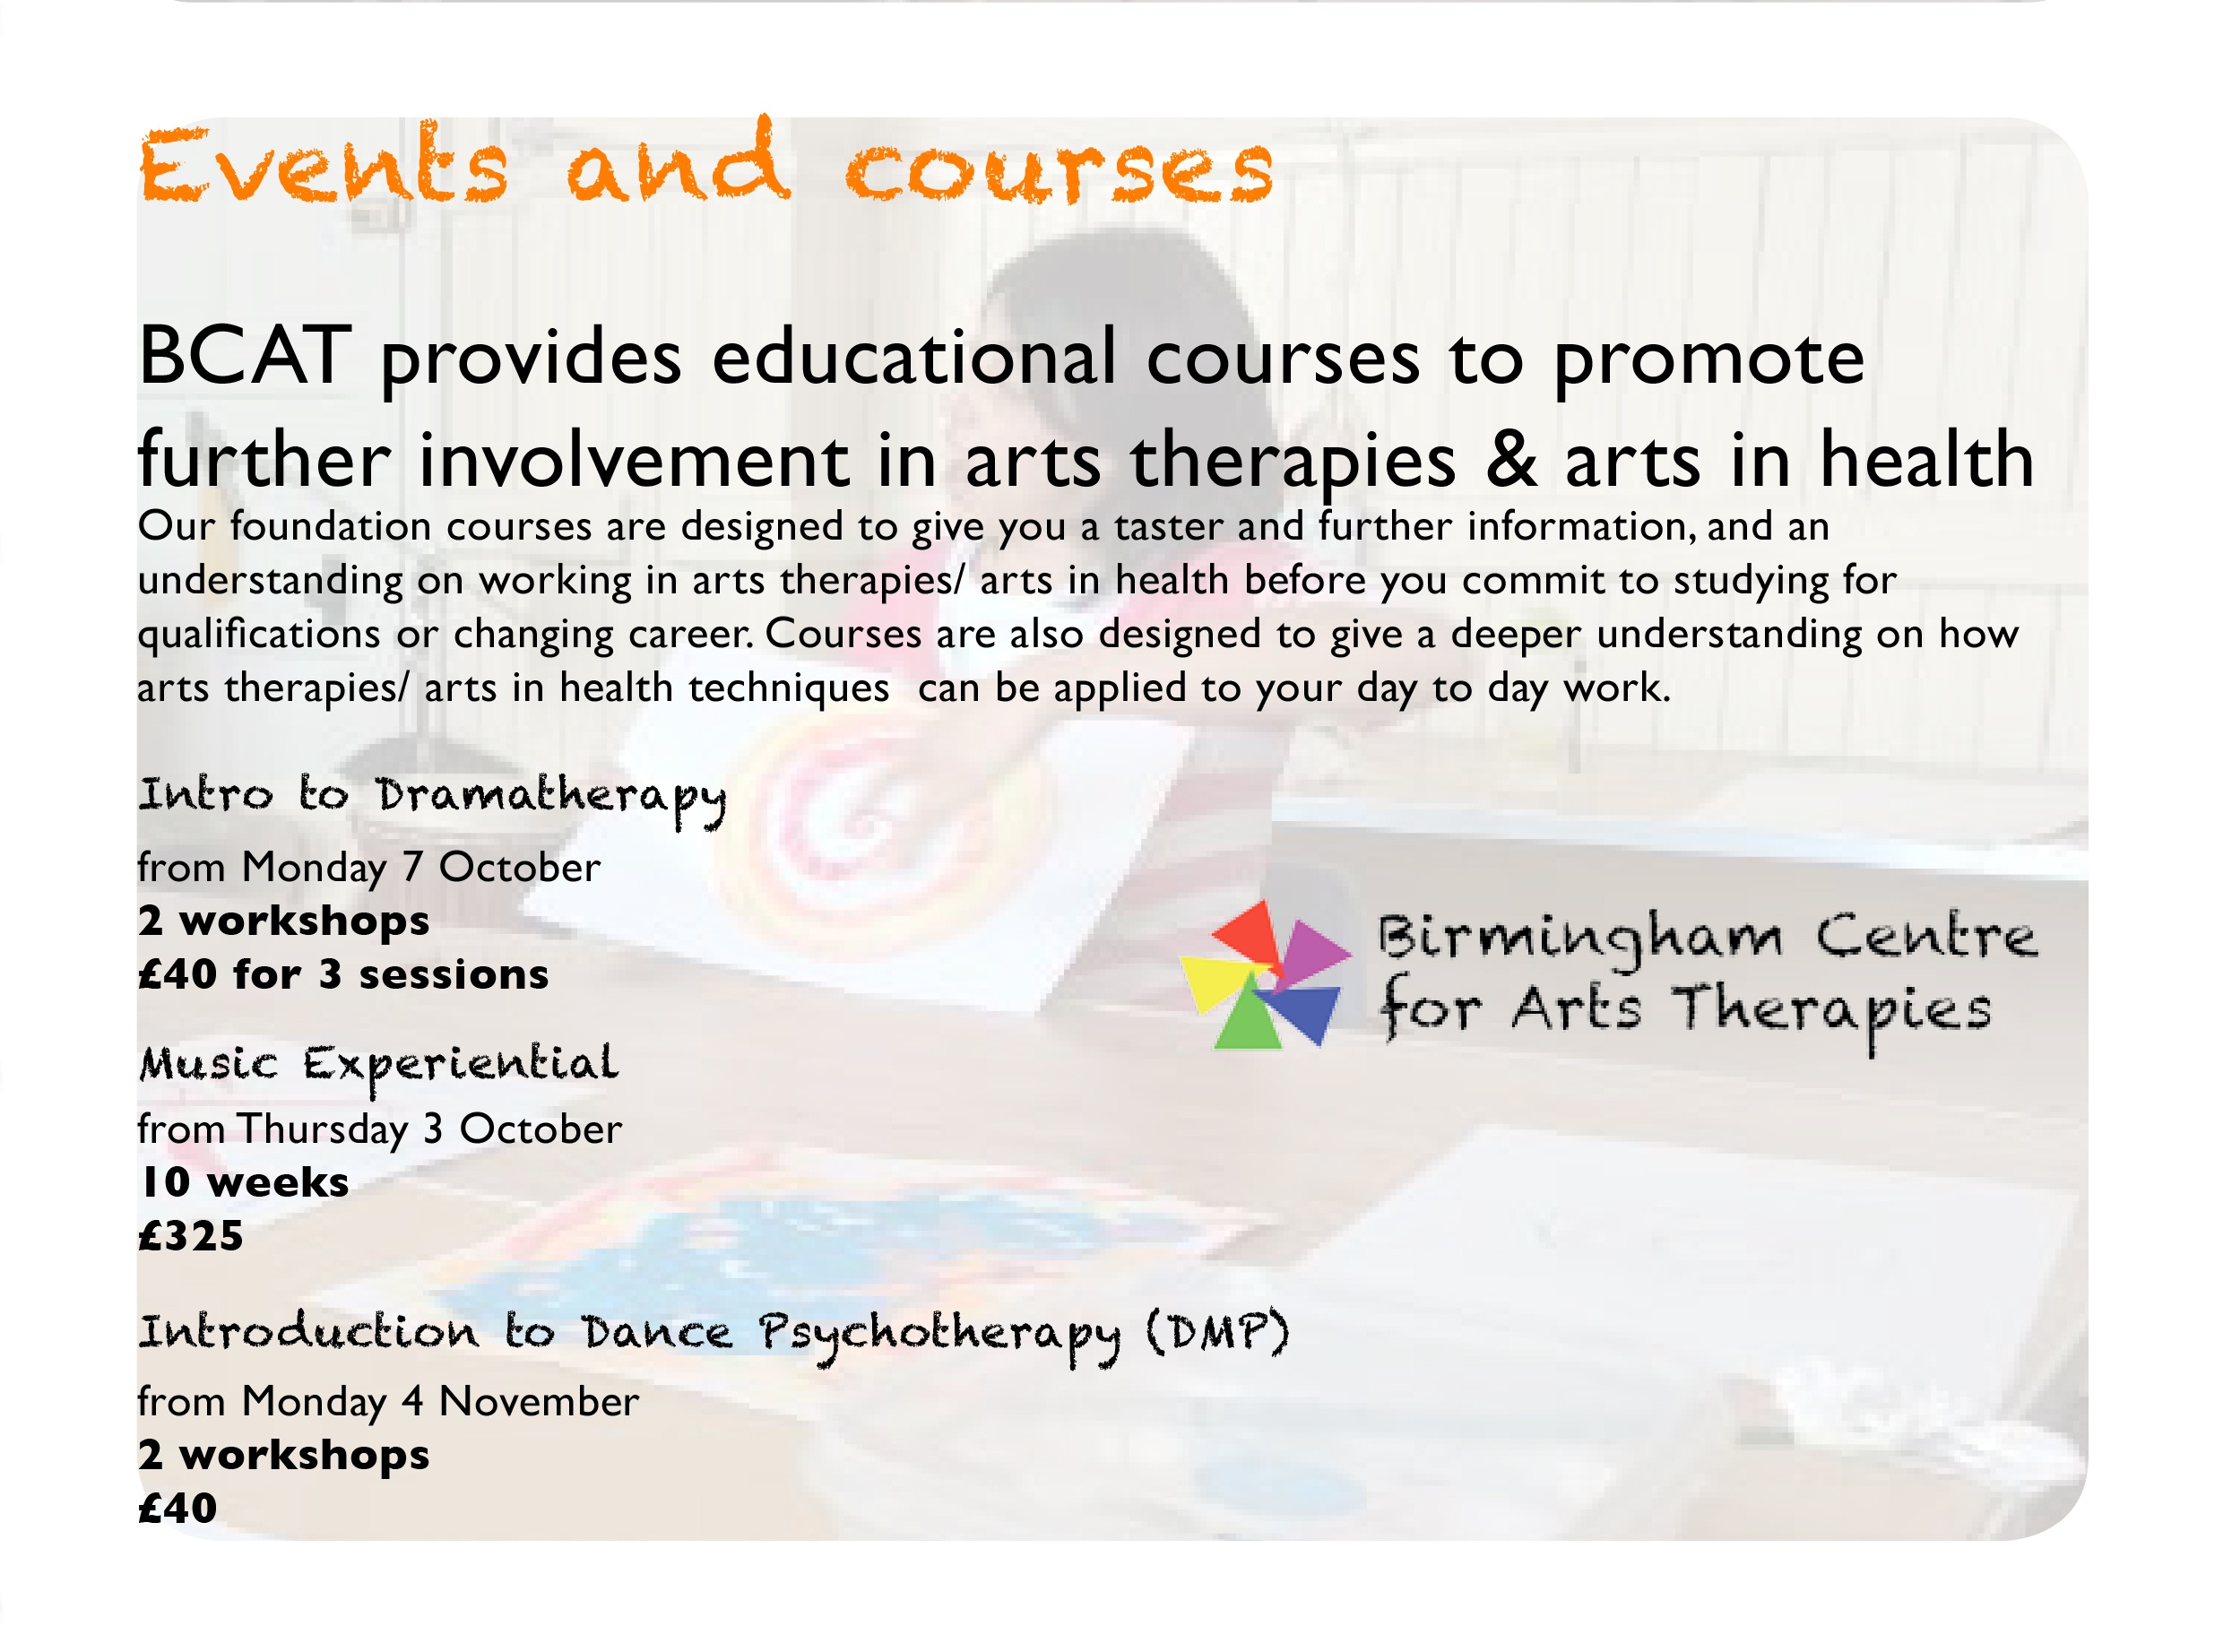 Birmingham Centre for Arts Therapies